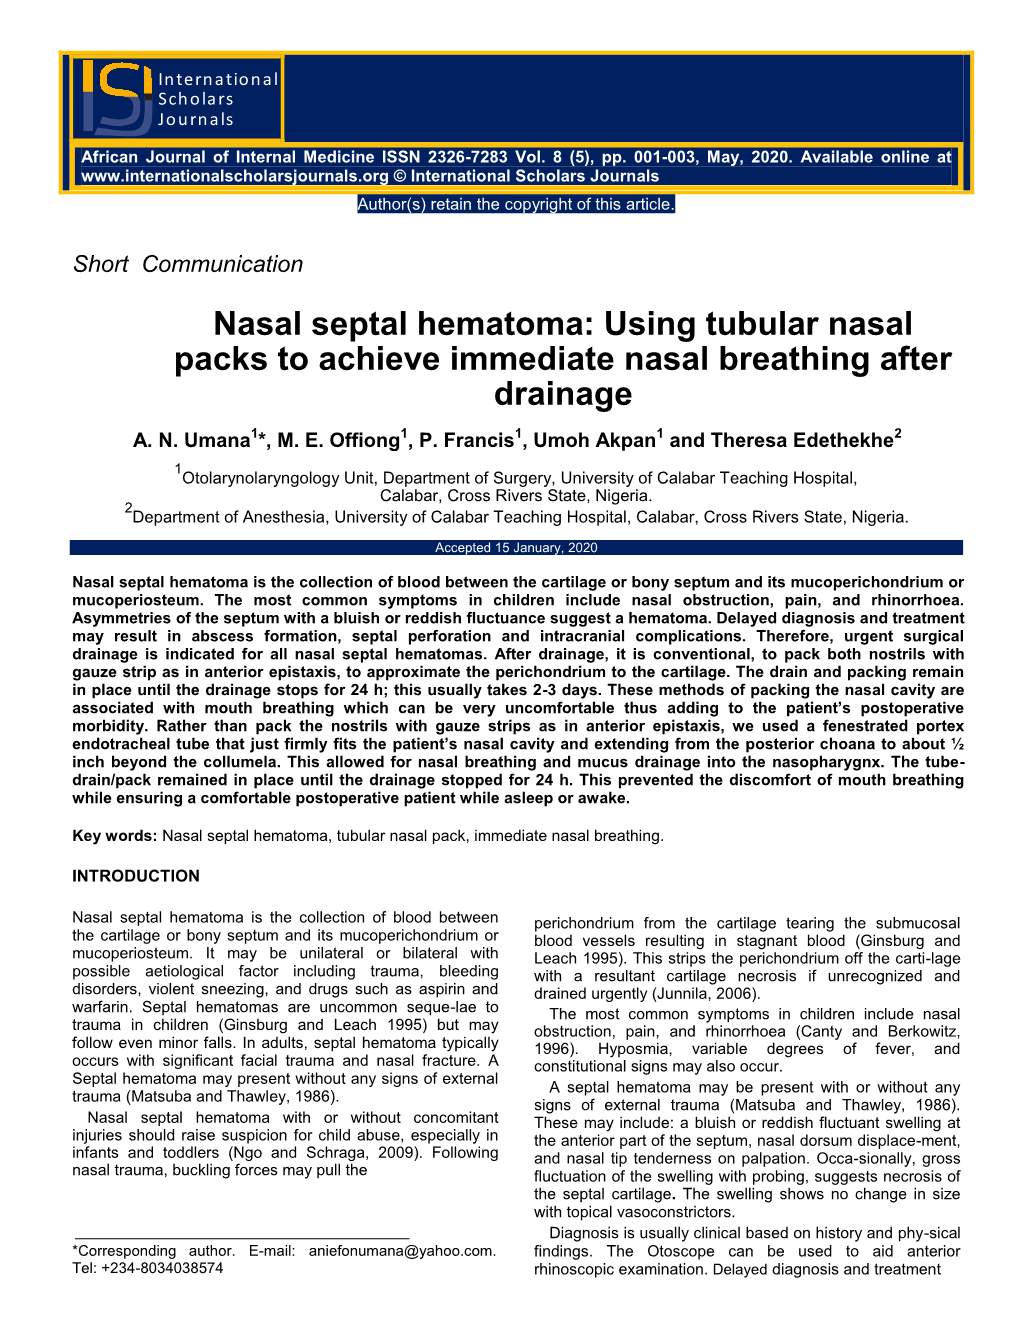 Nasal Septal Hematoma: Using Tubular Nasal Packs to Achieve Immediate Nasal Breathing After Drainage